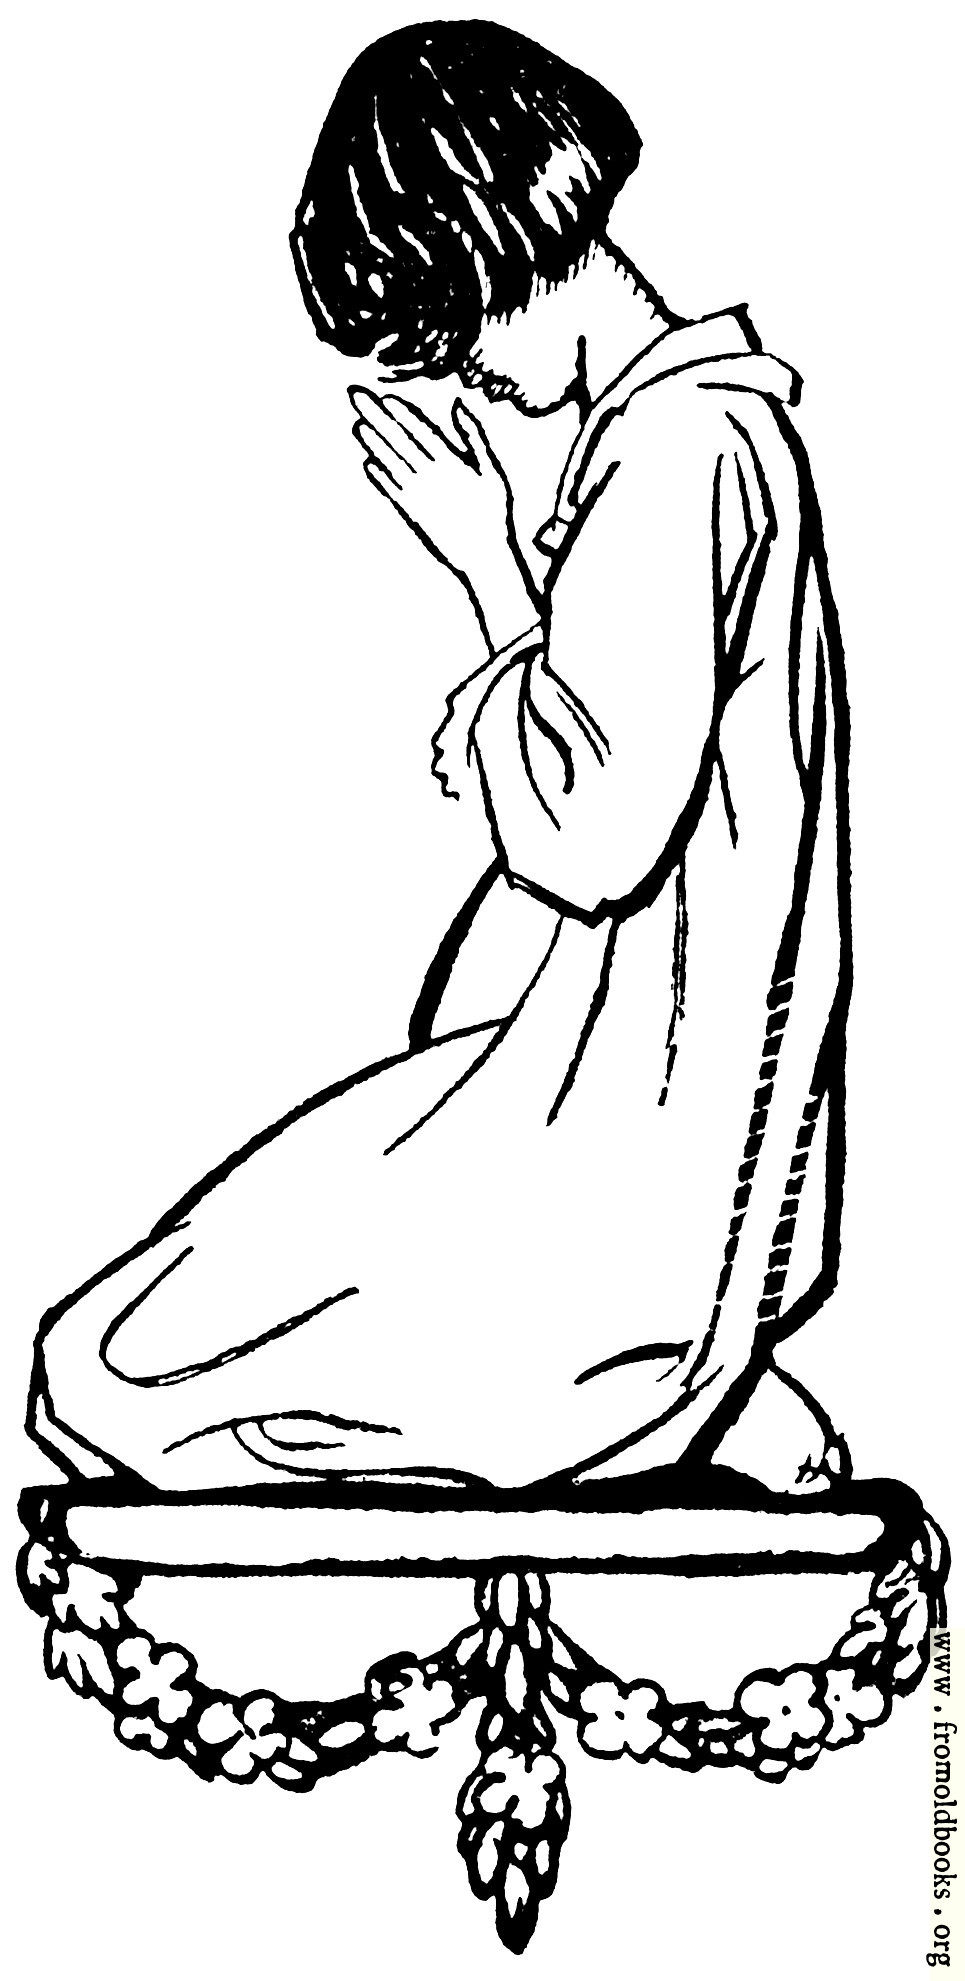 Girl at prayer [image 97x200 pixels 75]